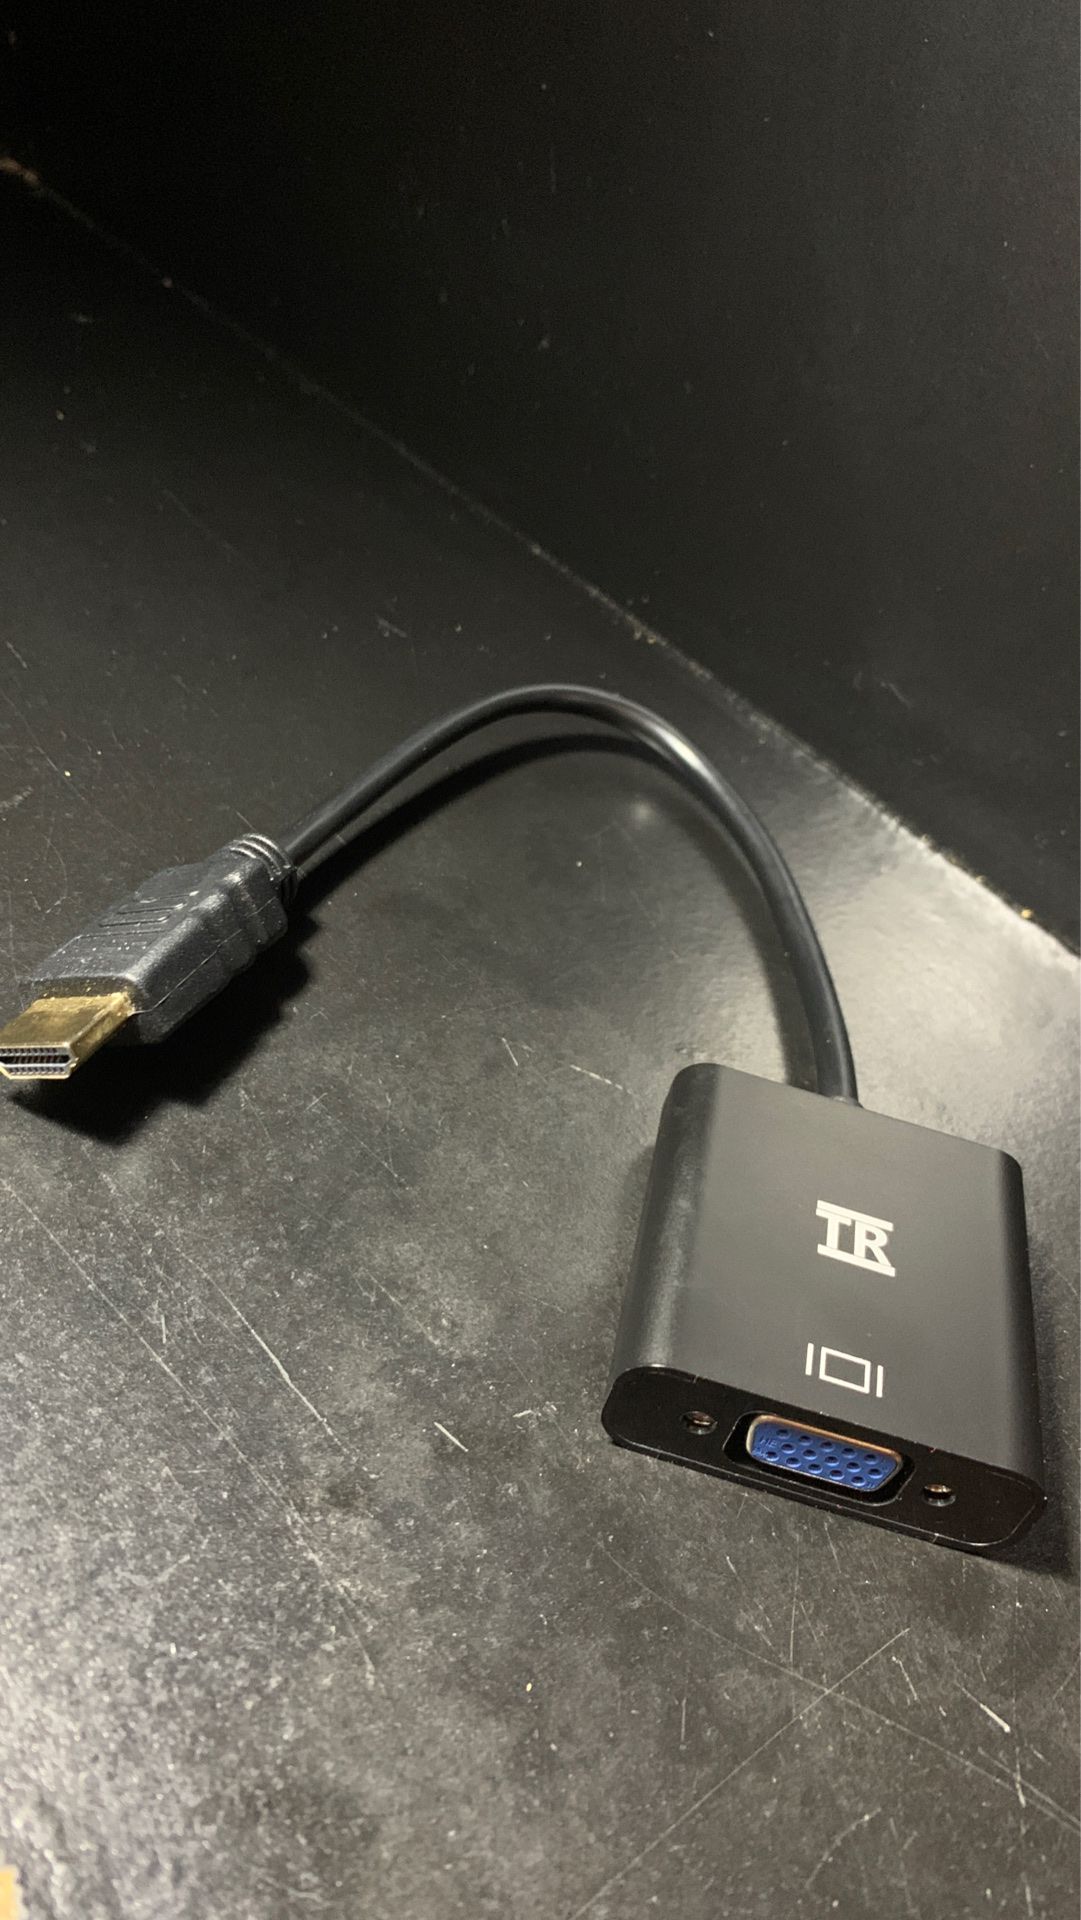 VGA to HDMI CORD